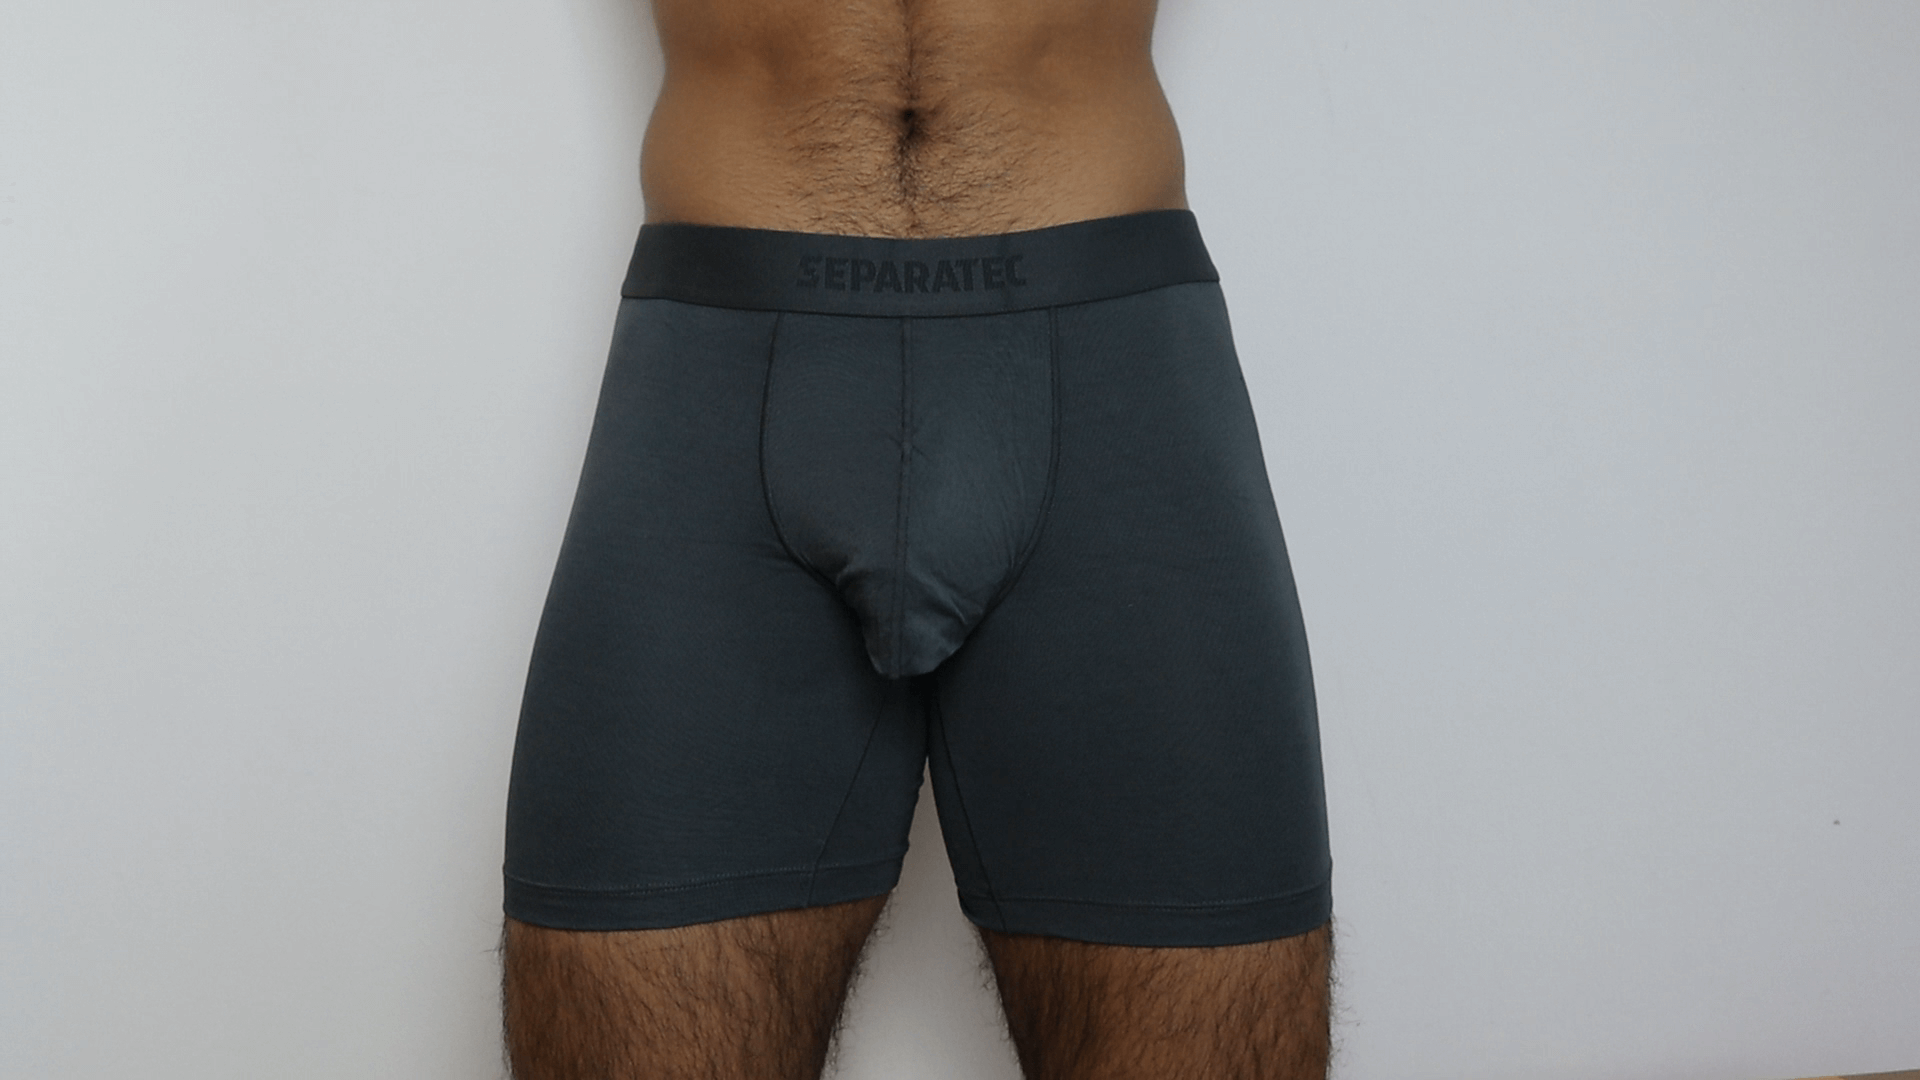 Separatec Bamboo Boxer Briefs: A Game-Changer in Men's Underwear